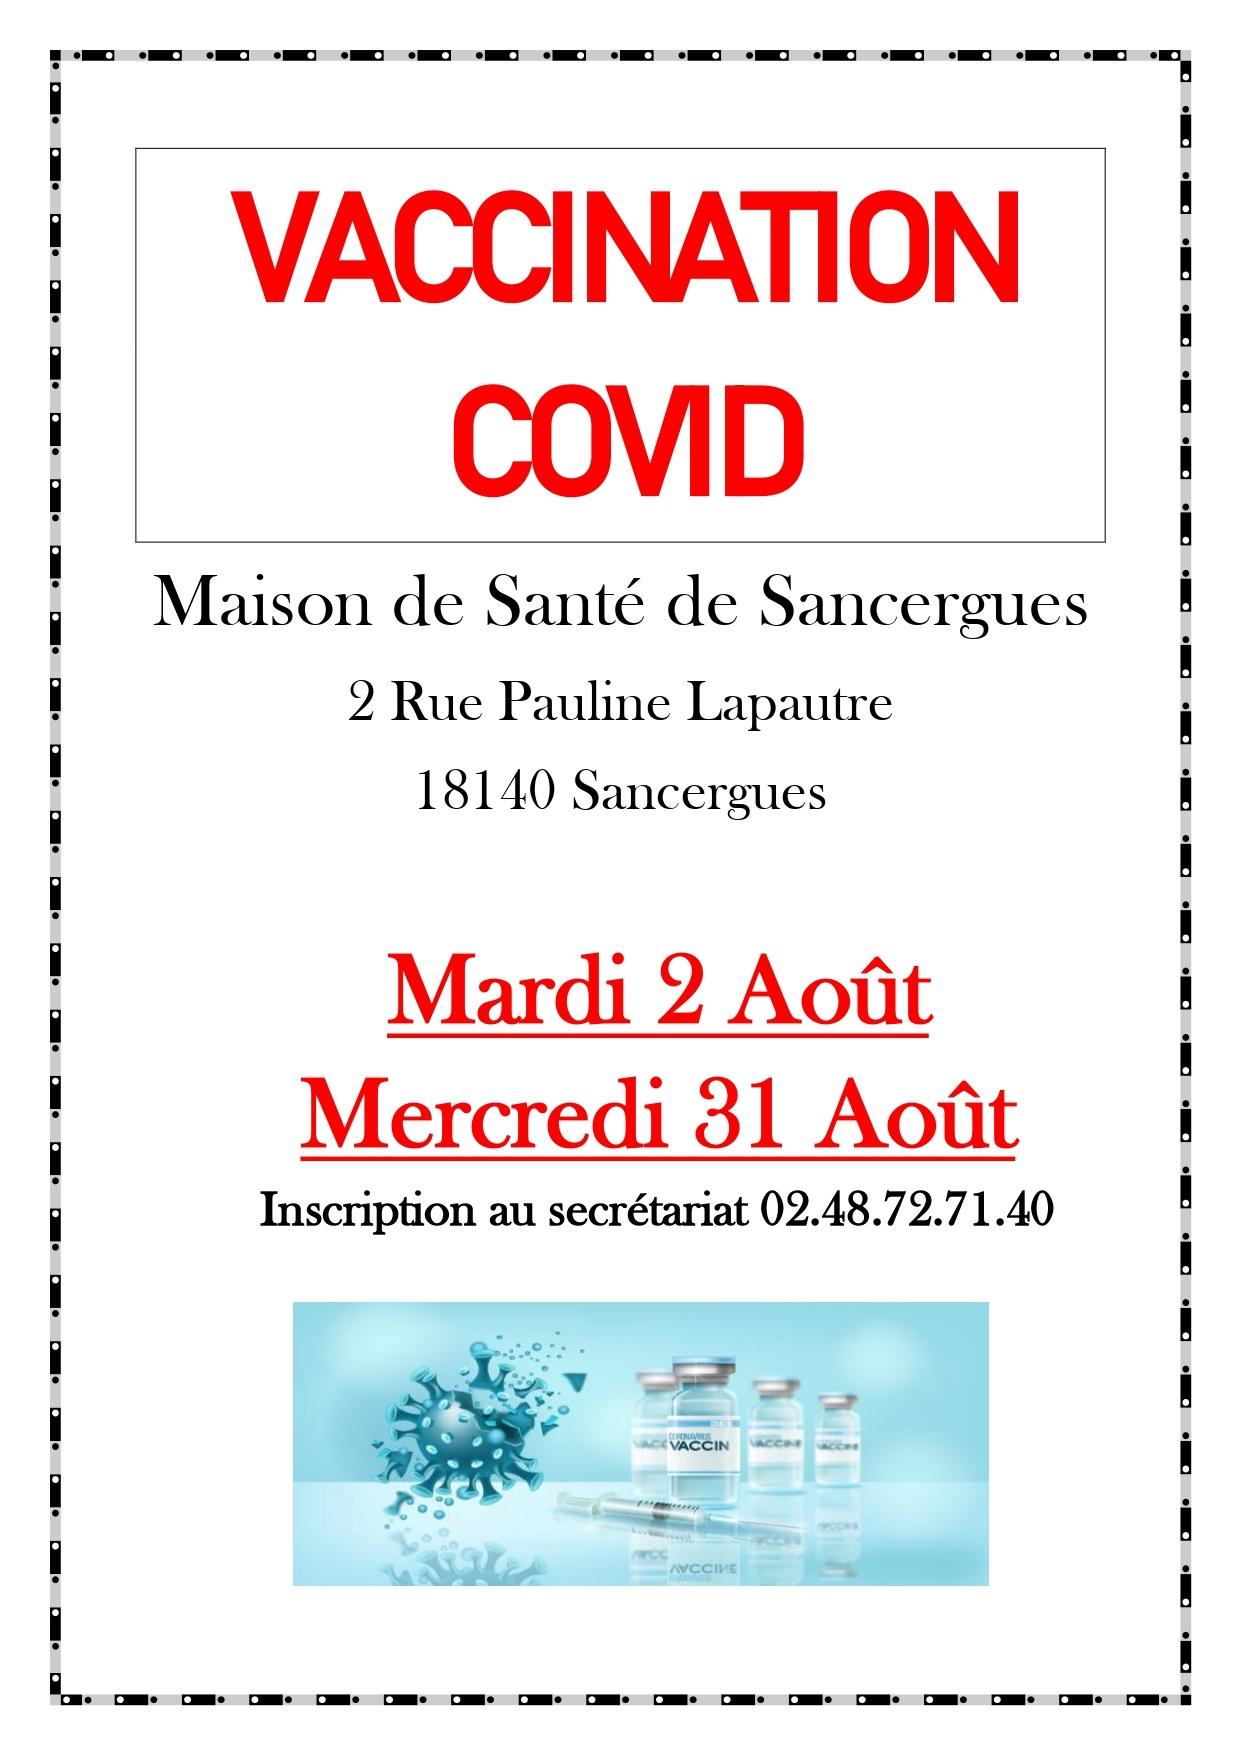 Vaccination covid msp sancergues 2